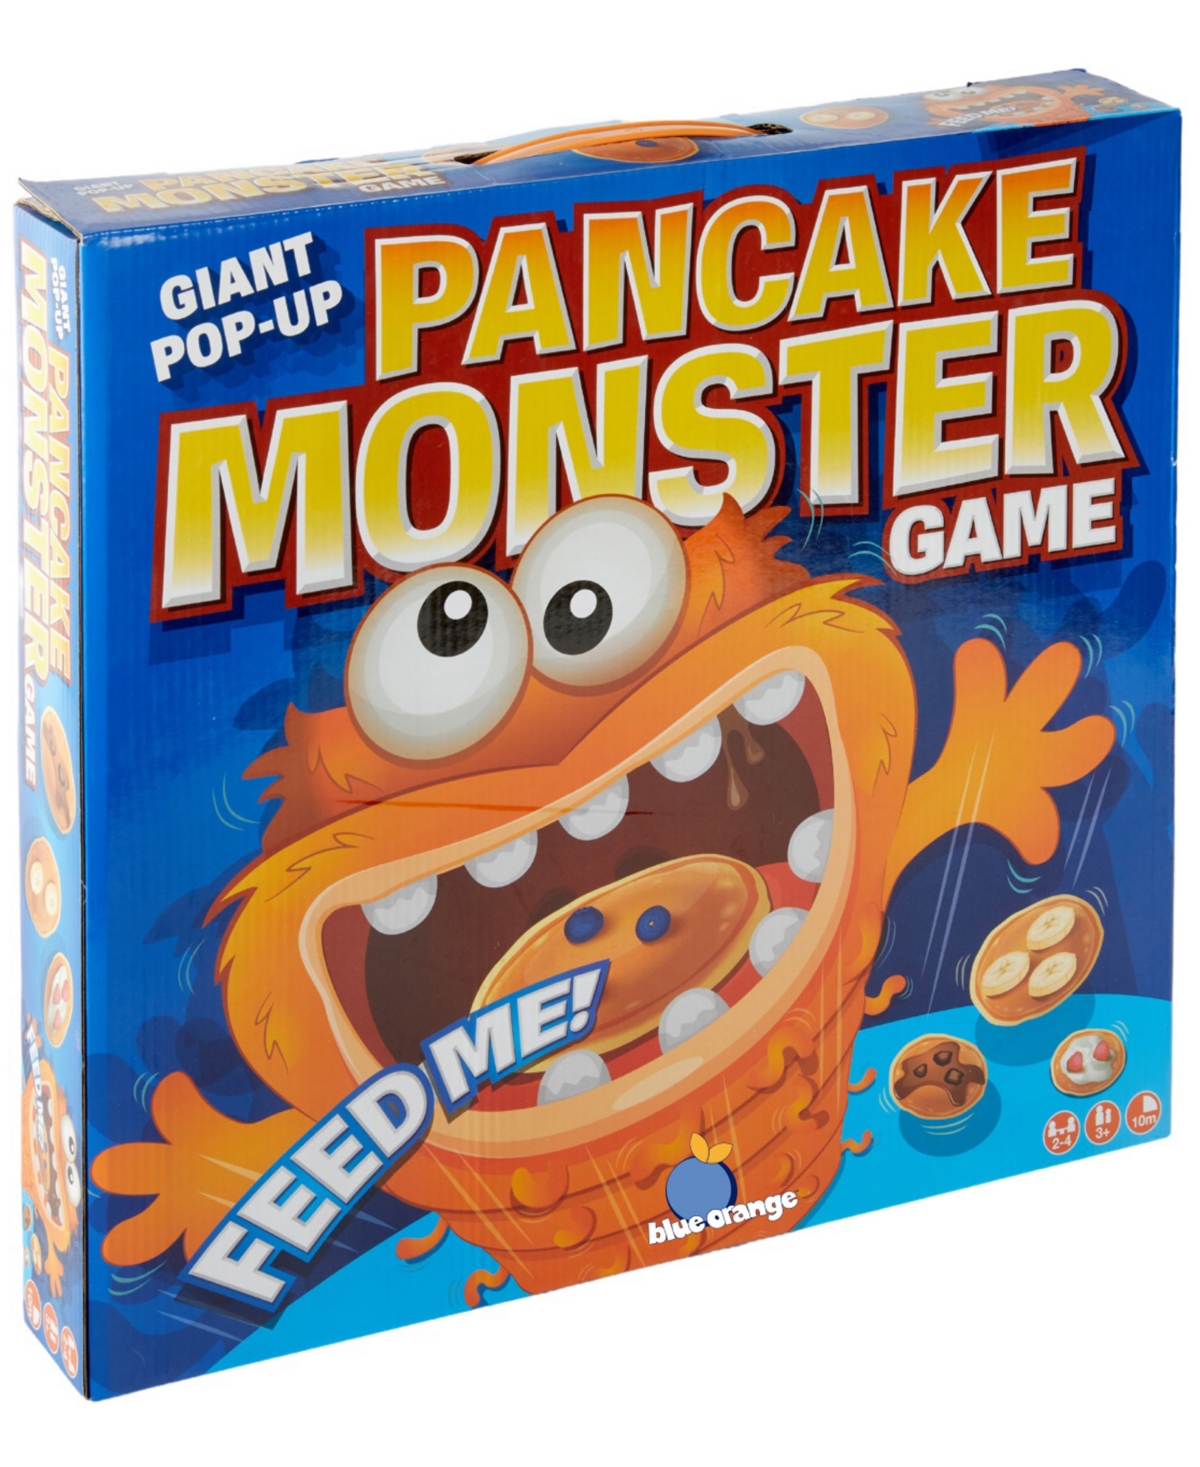 Blue Orange Games Babies' Giant Pop-up Pancake Monster Game Set, 15 Piece In Multi Color